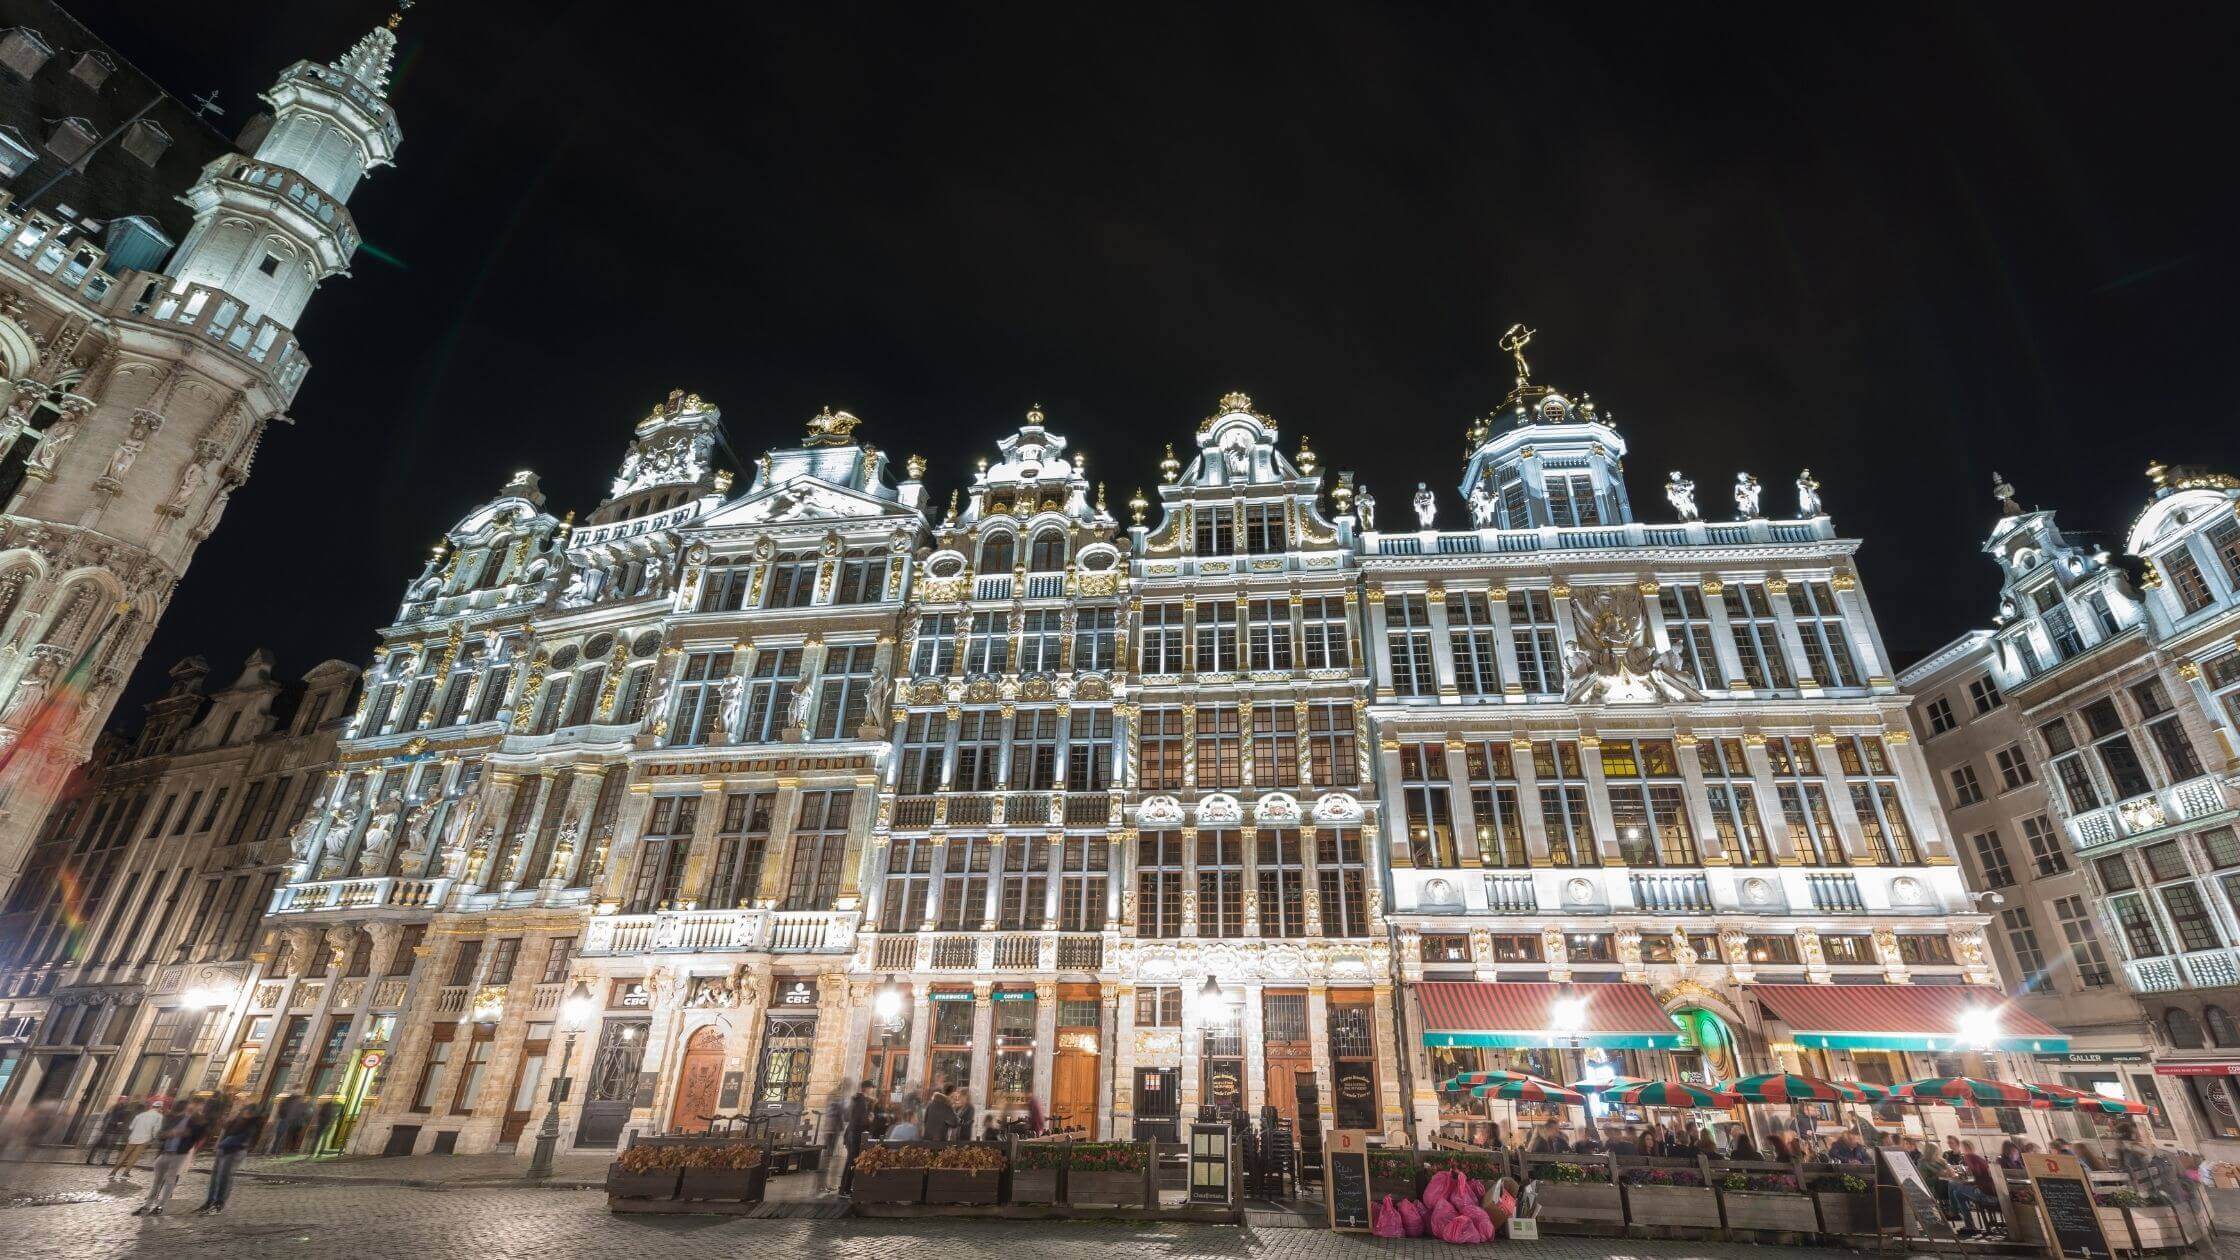 Grand Place – Brussels, Belgium